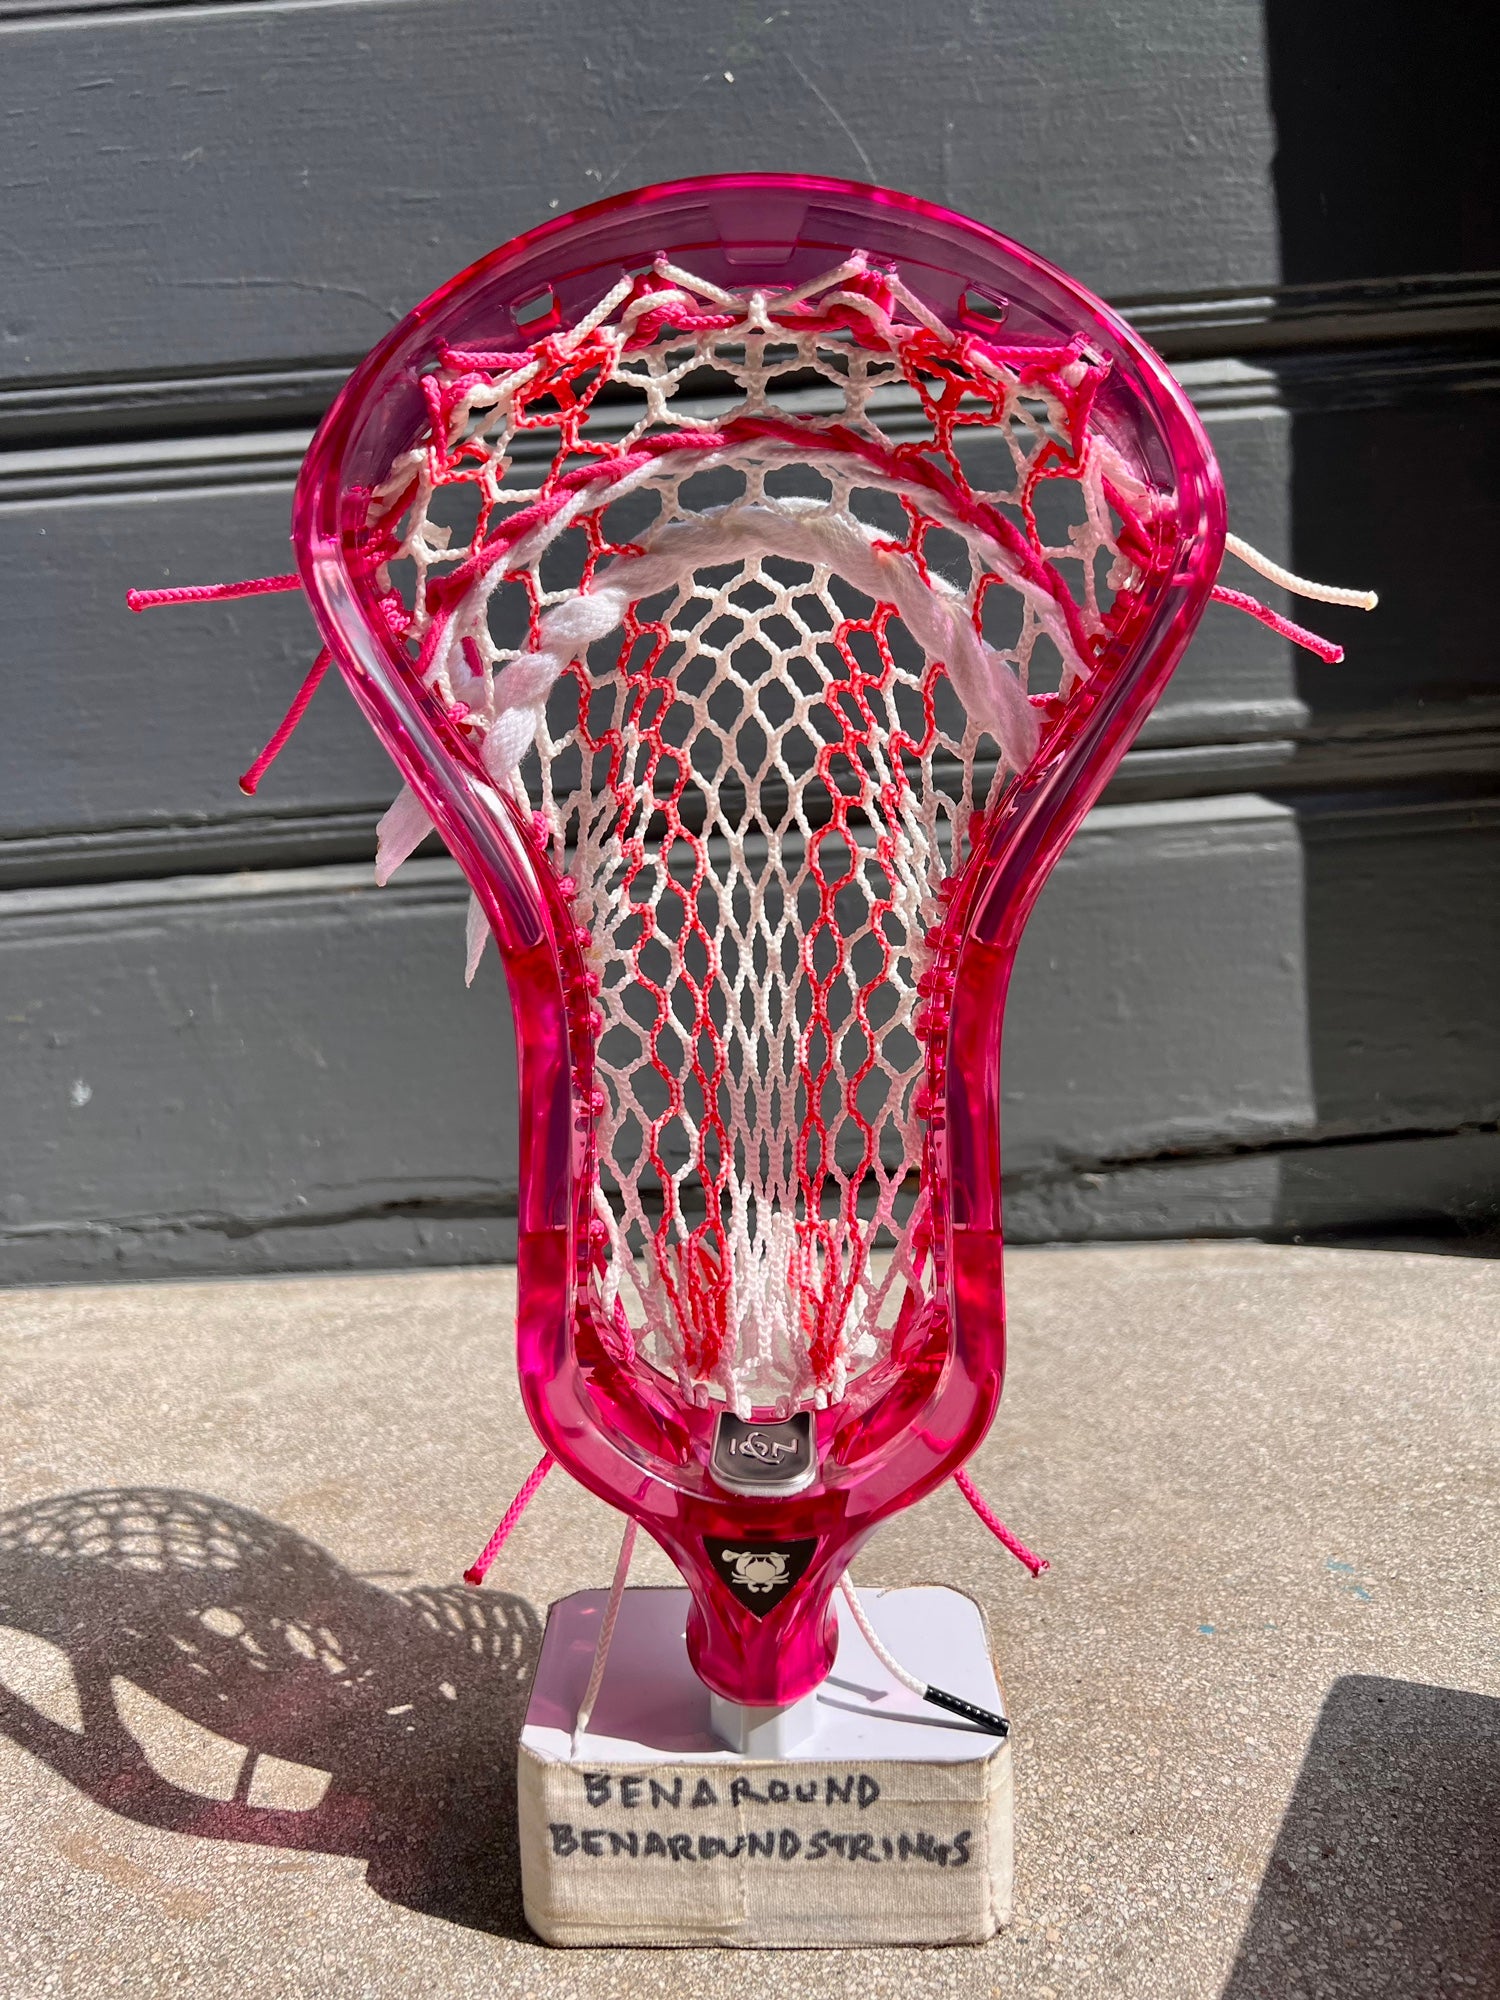 ECD Dyed Ion Lacrosse Head - Pink